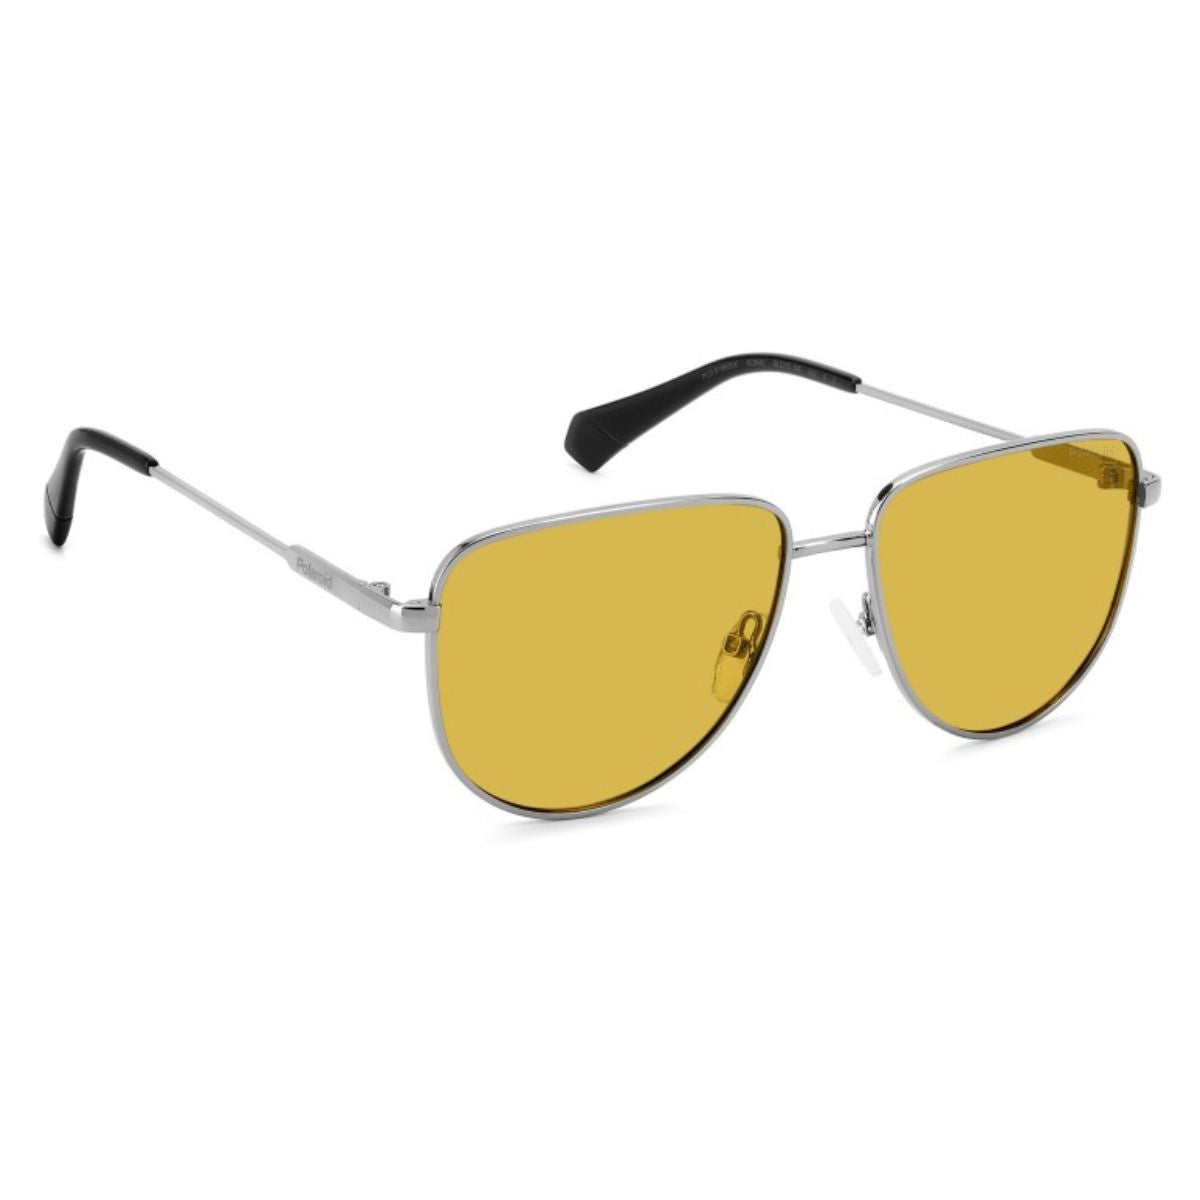 "Trending Polaroid 6196 Polarized Sunglasses For Unisex"